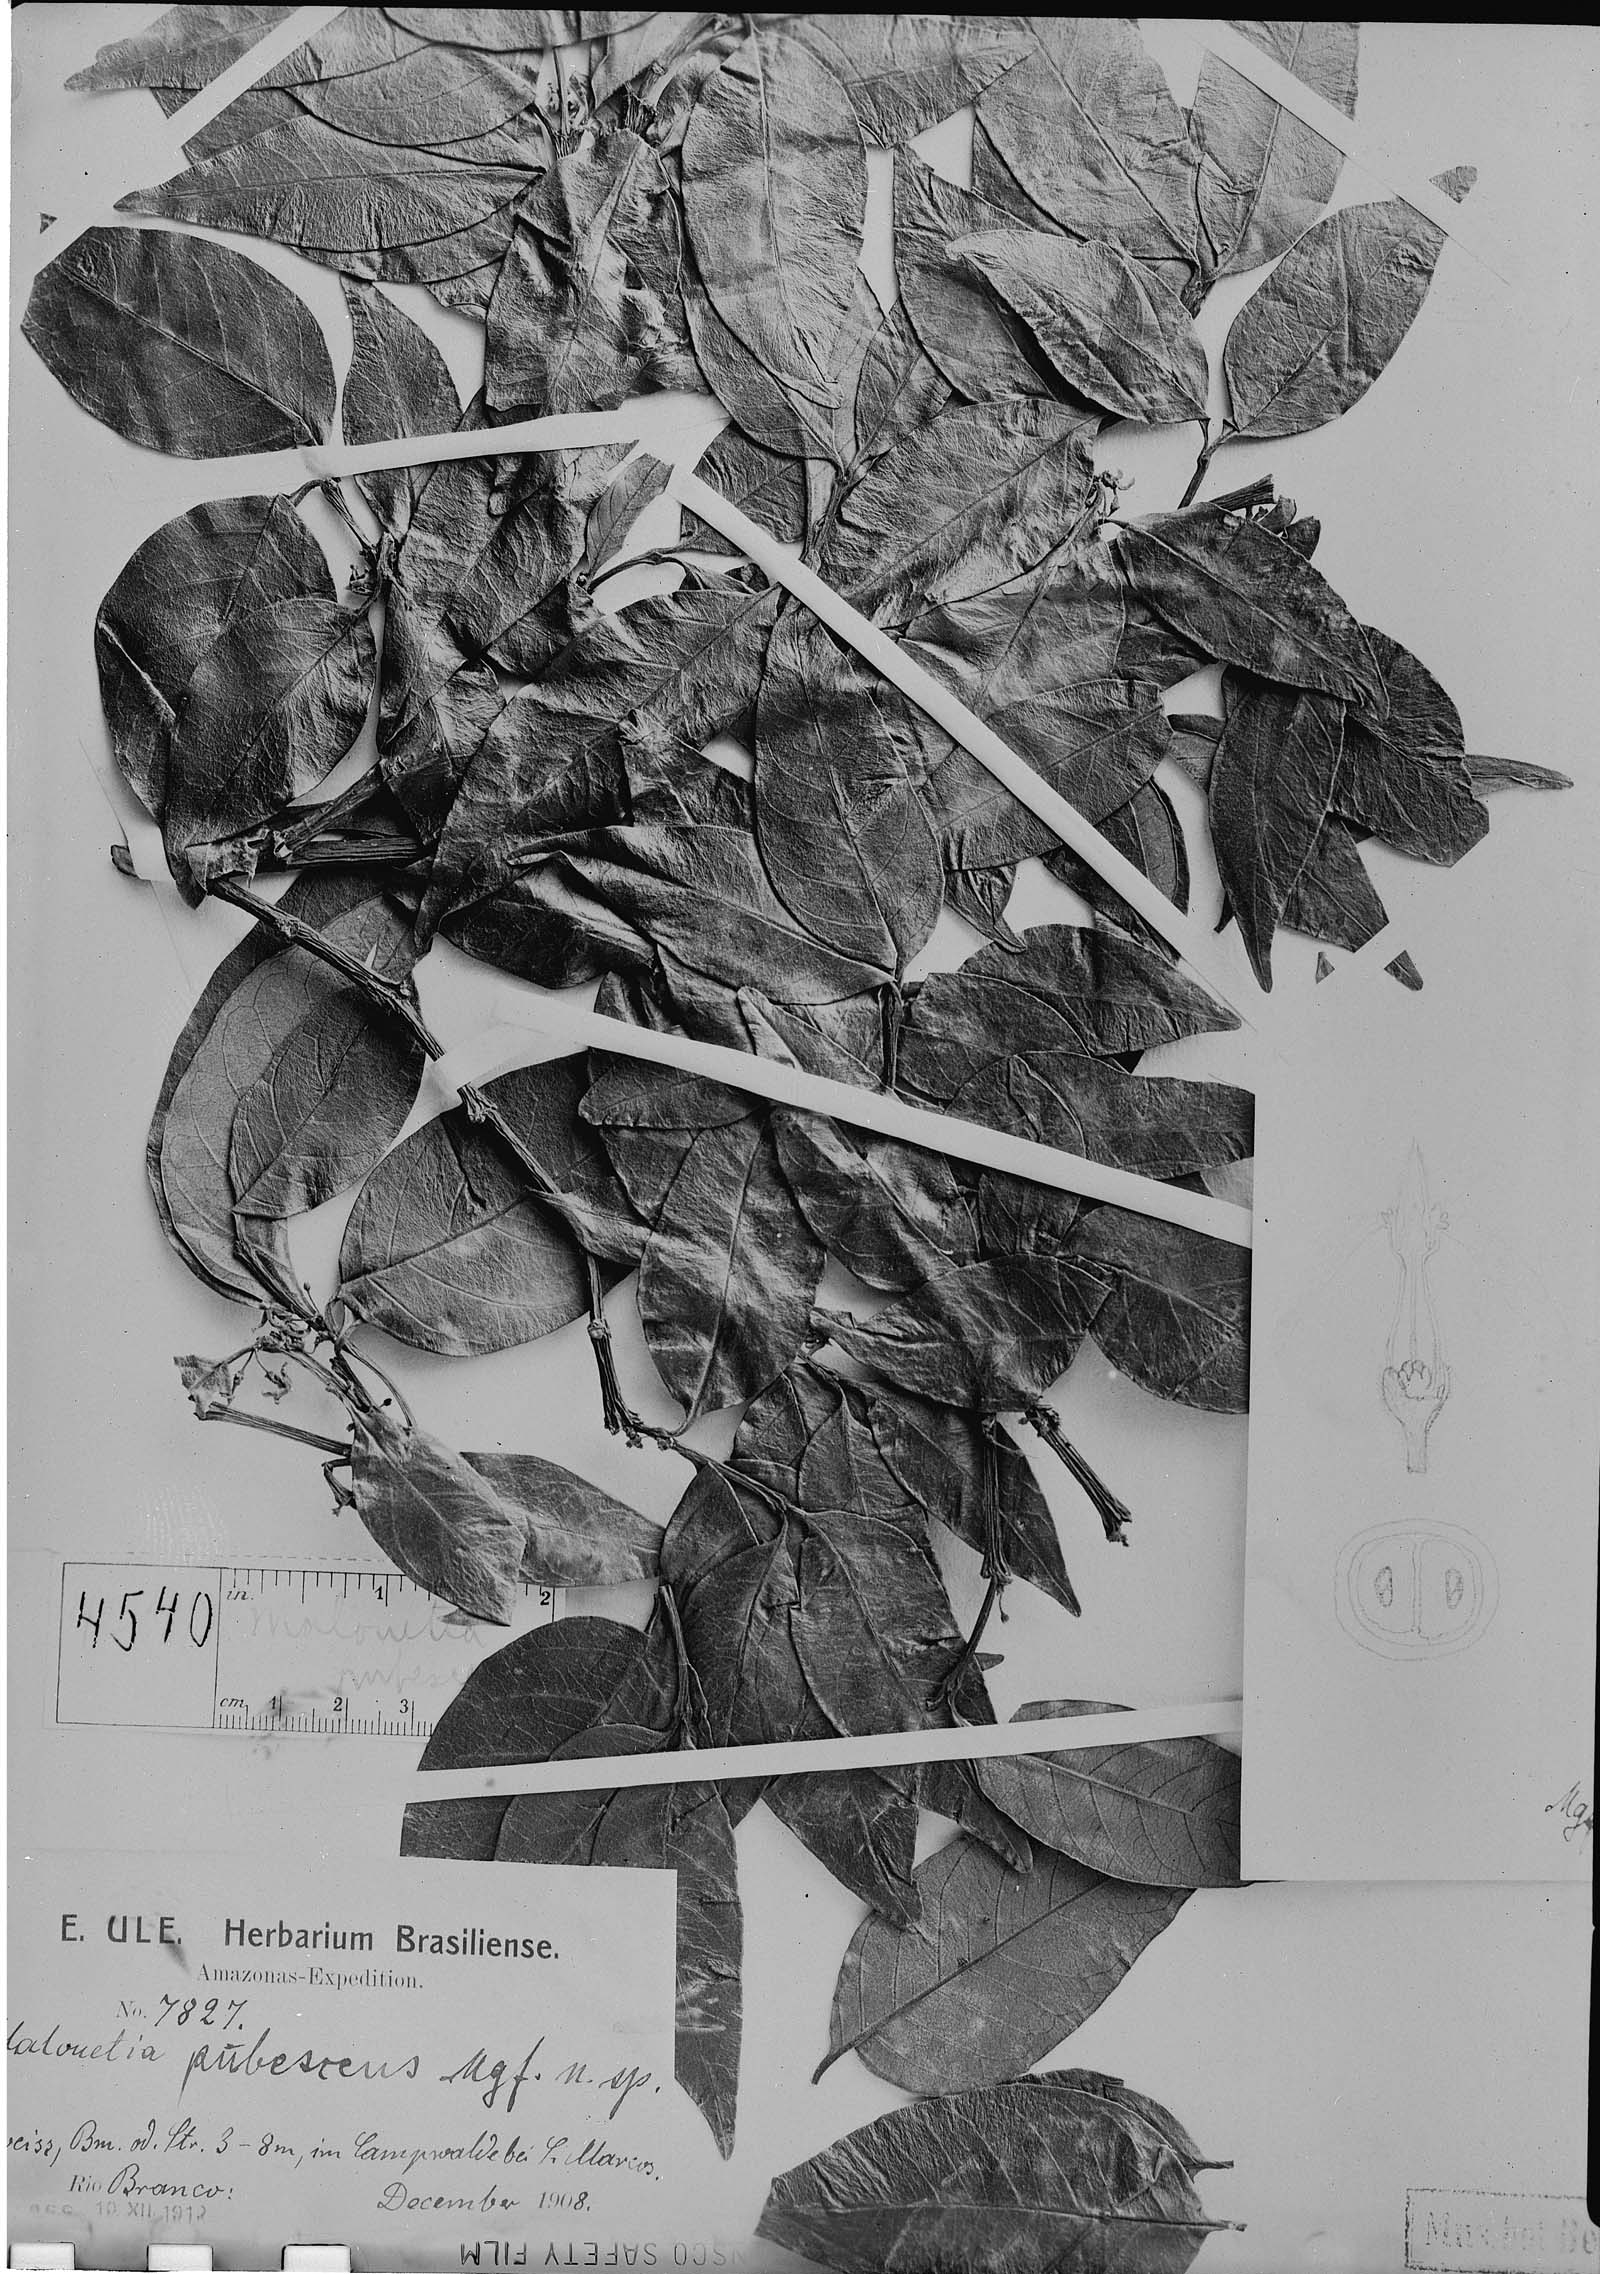 Malouetia pubescens image